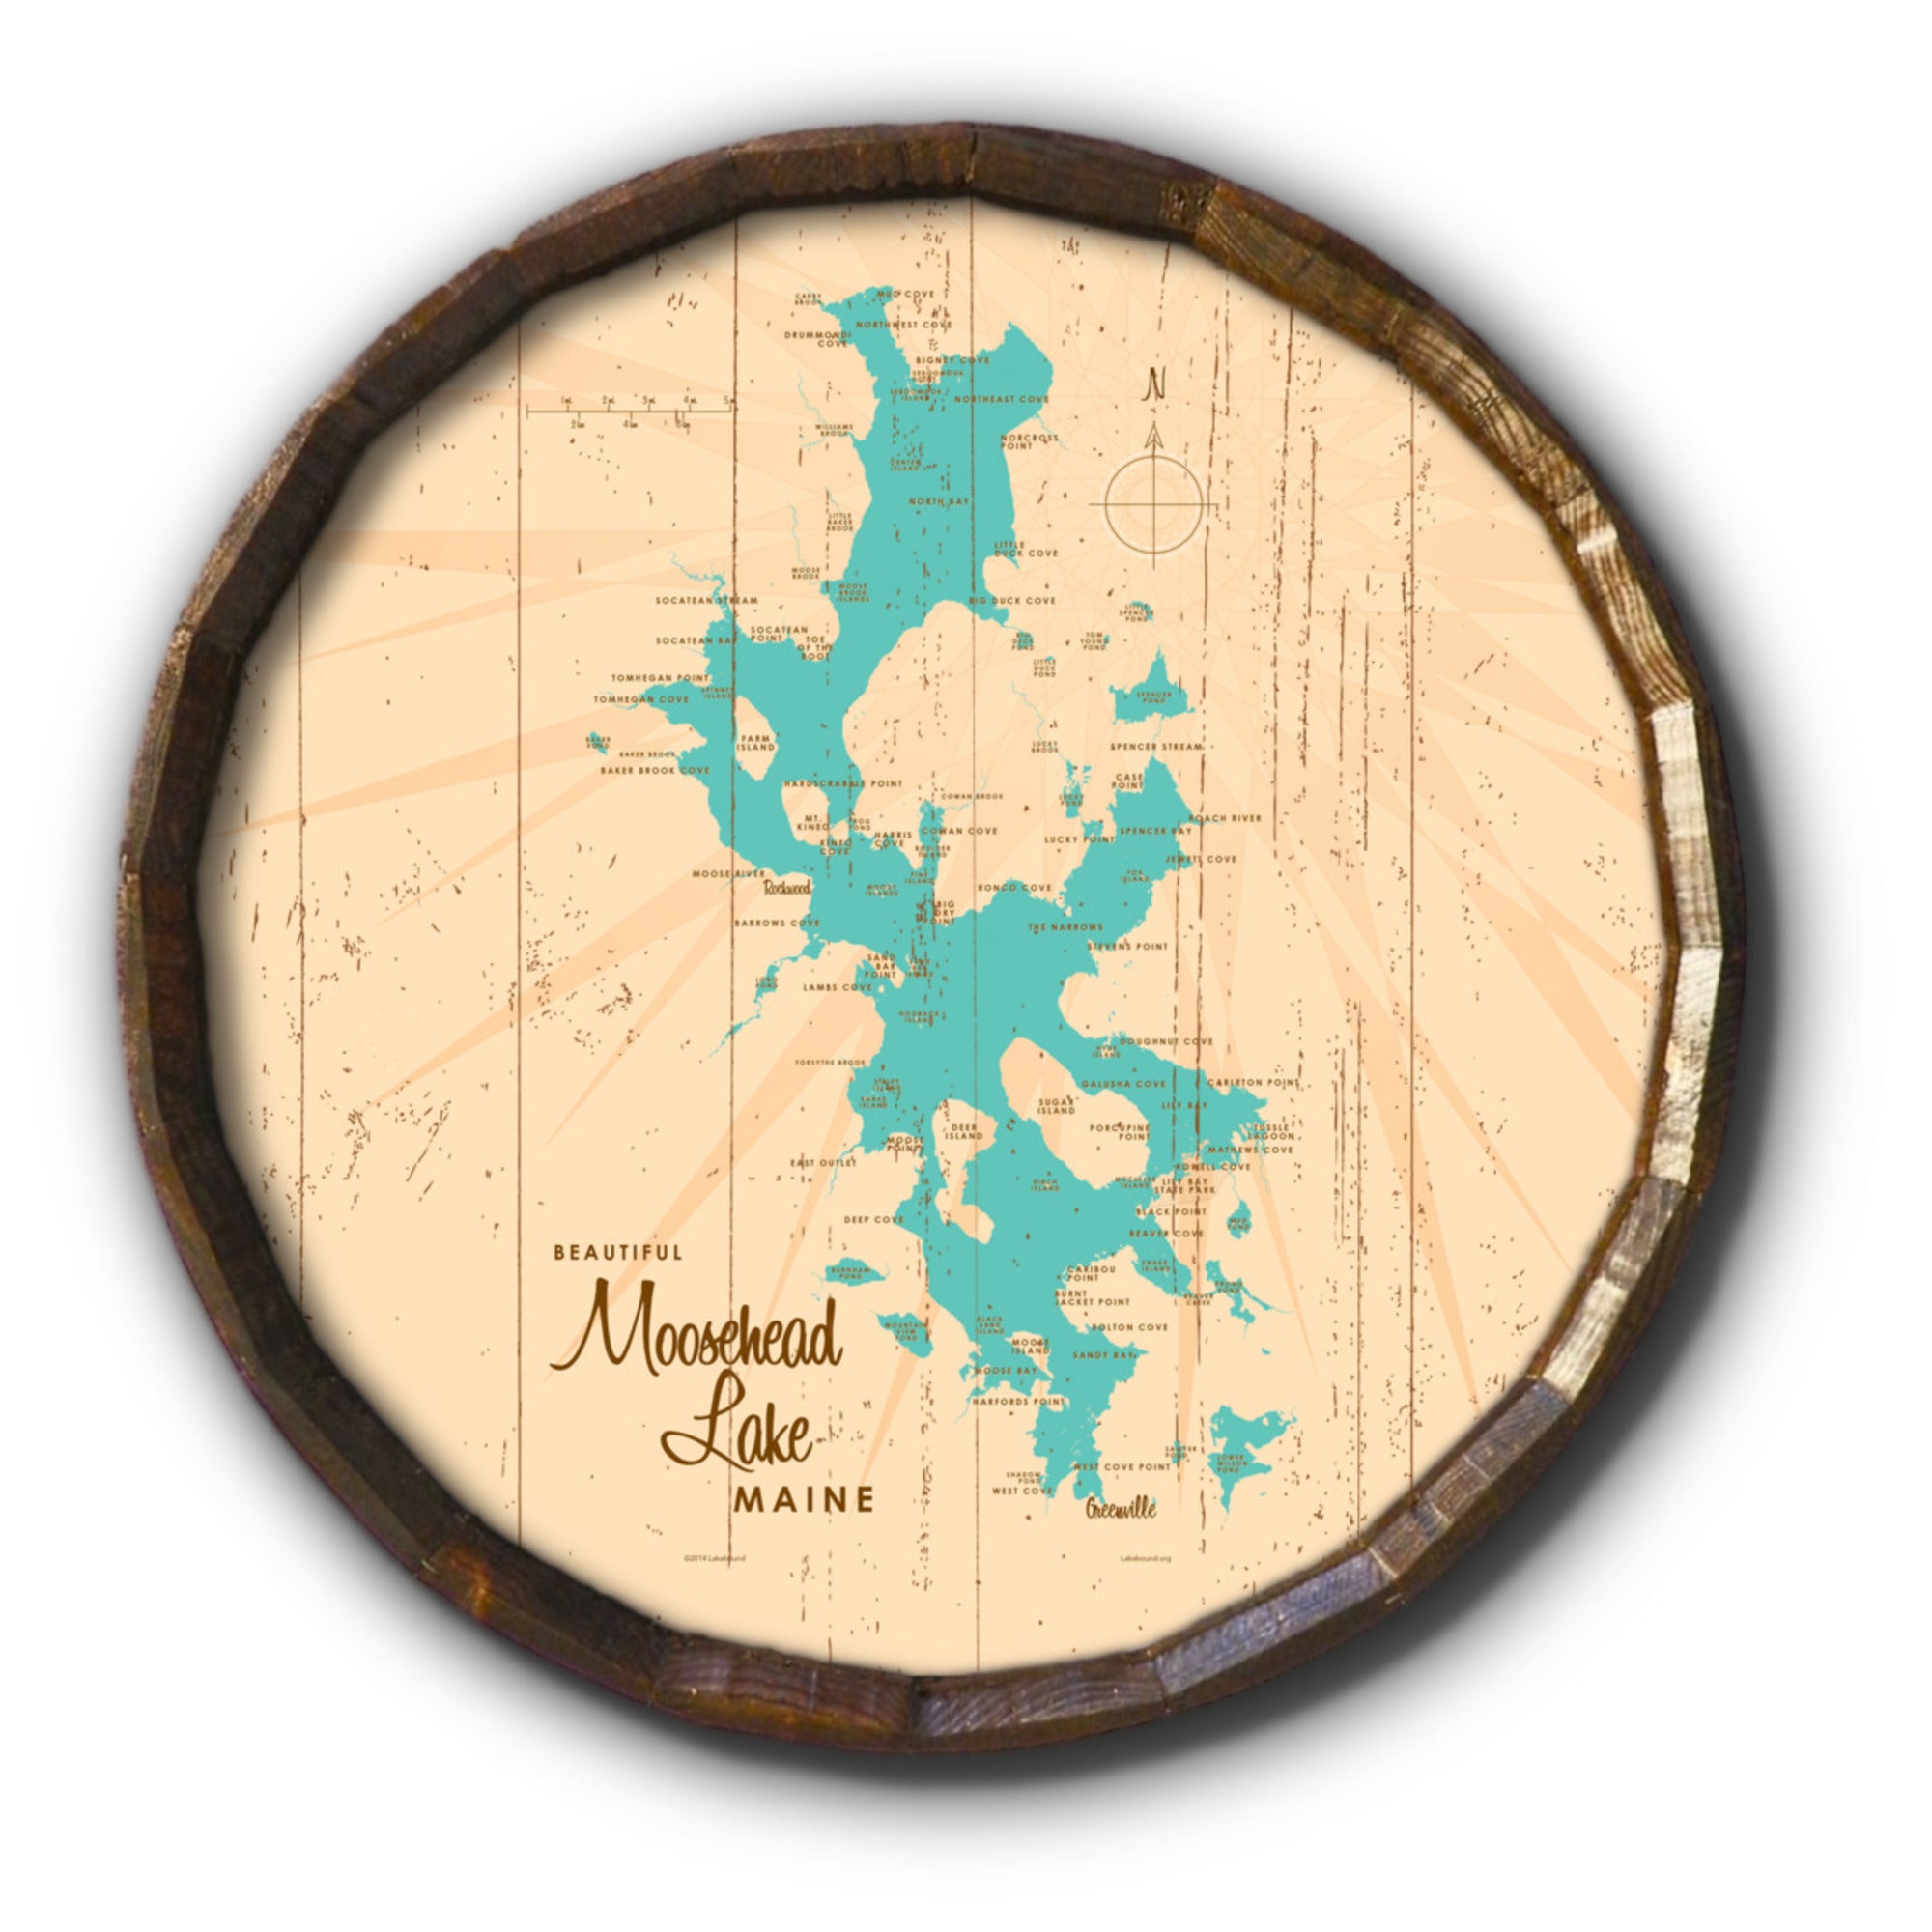 Moosehead Lake Maine, Rustic Barrel End Map Art